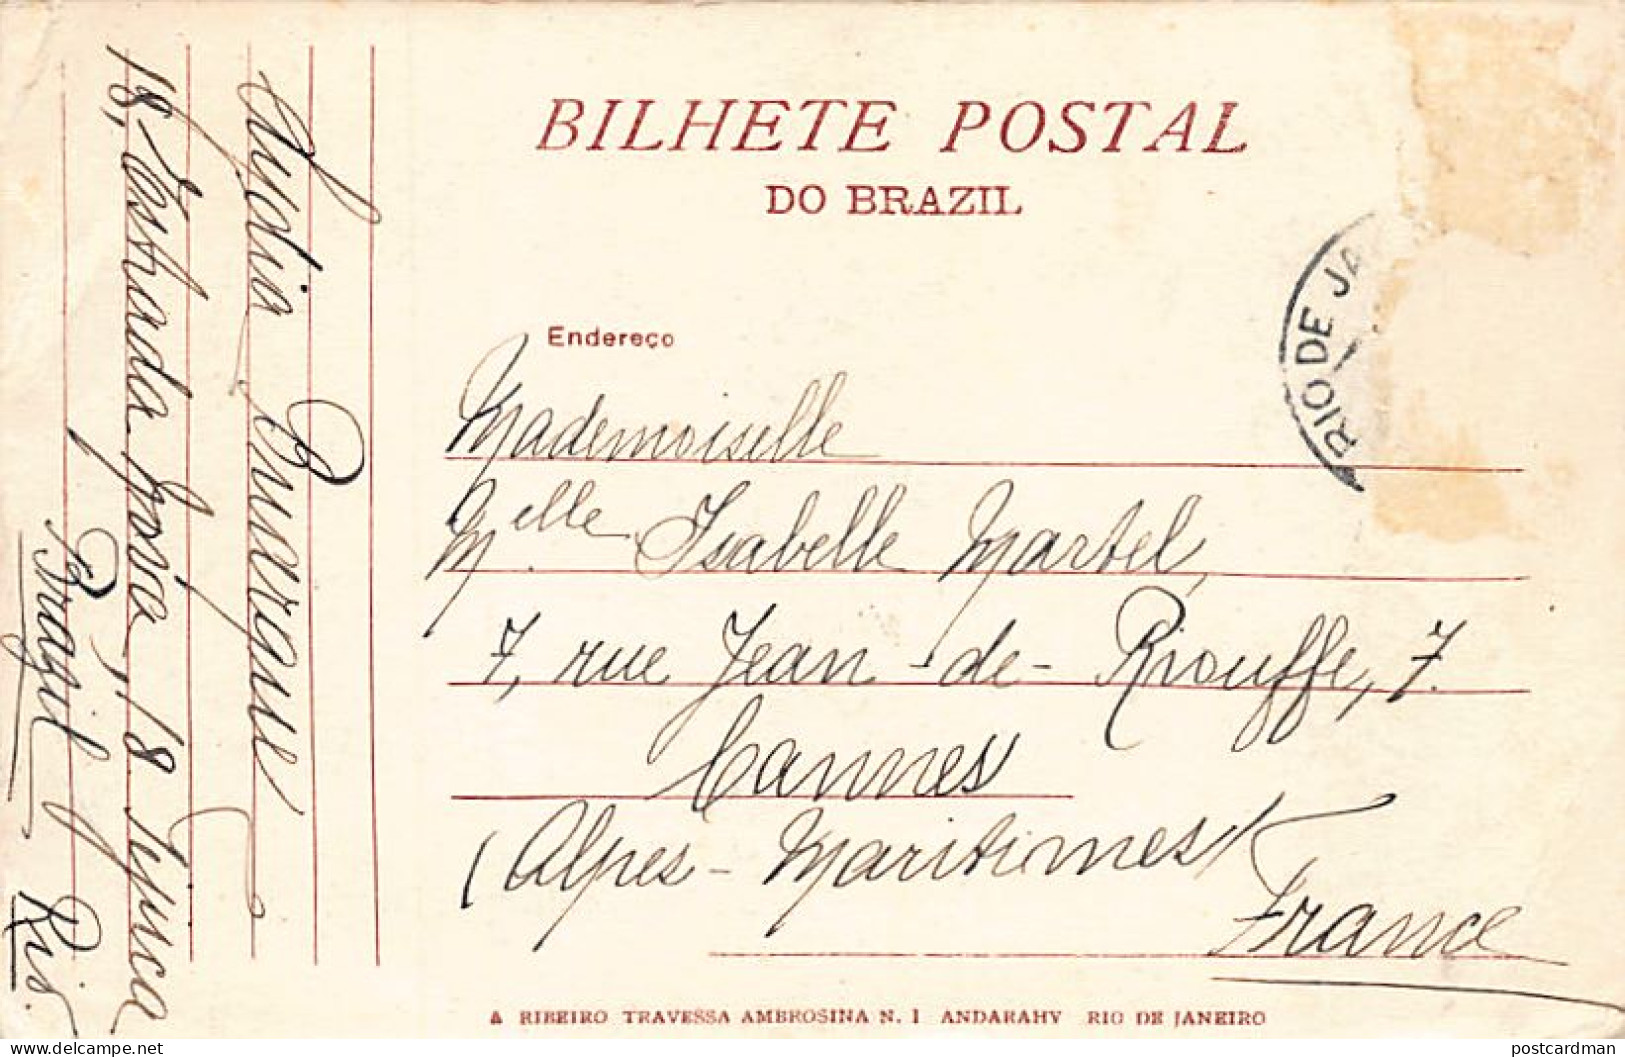 BRASIL Brazil - RIO DE JANEIRO - Exposiçao Nacional De 1908 - Ed. A. Ribeiro  - Rio De Janeiro